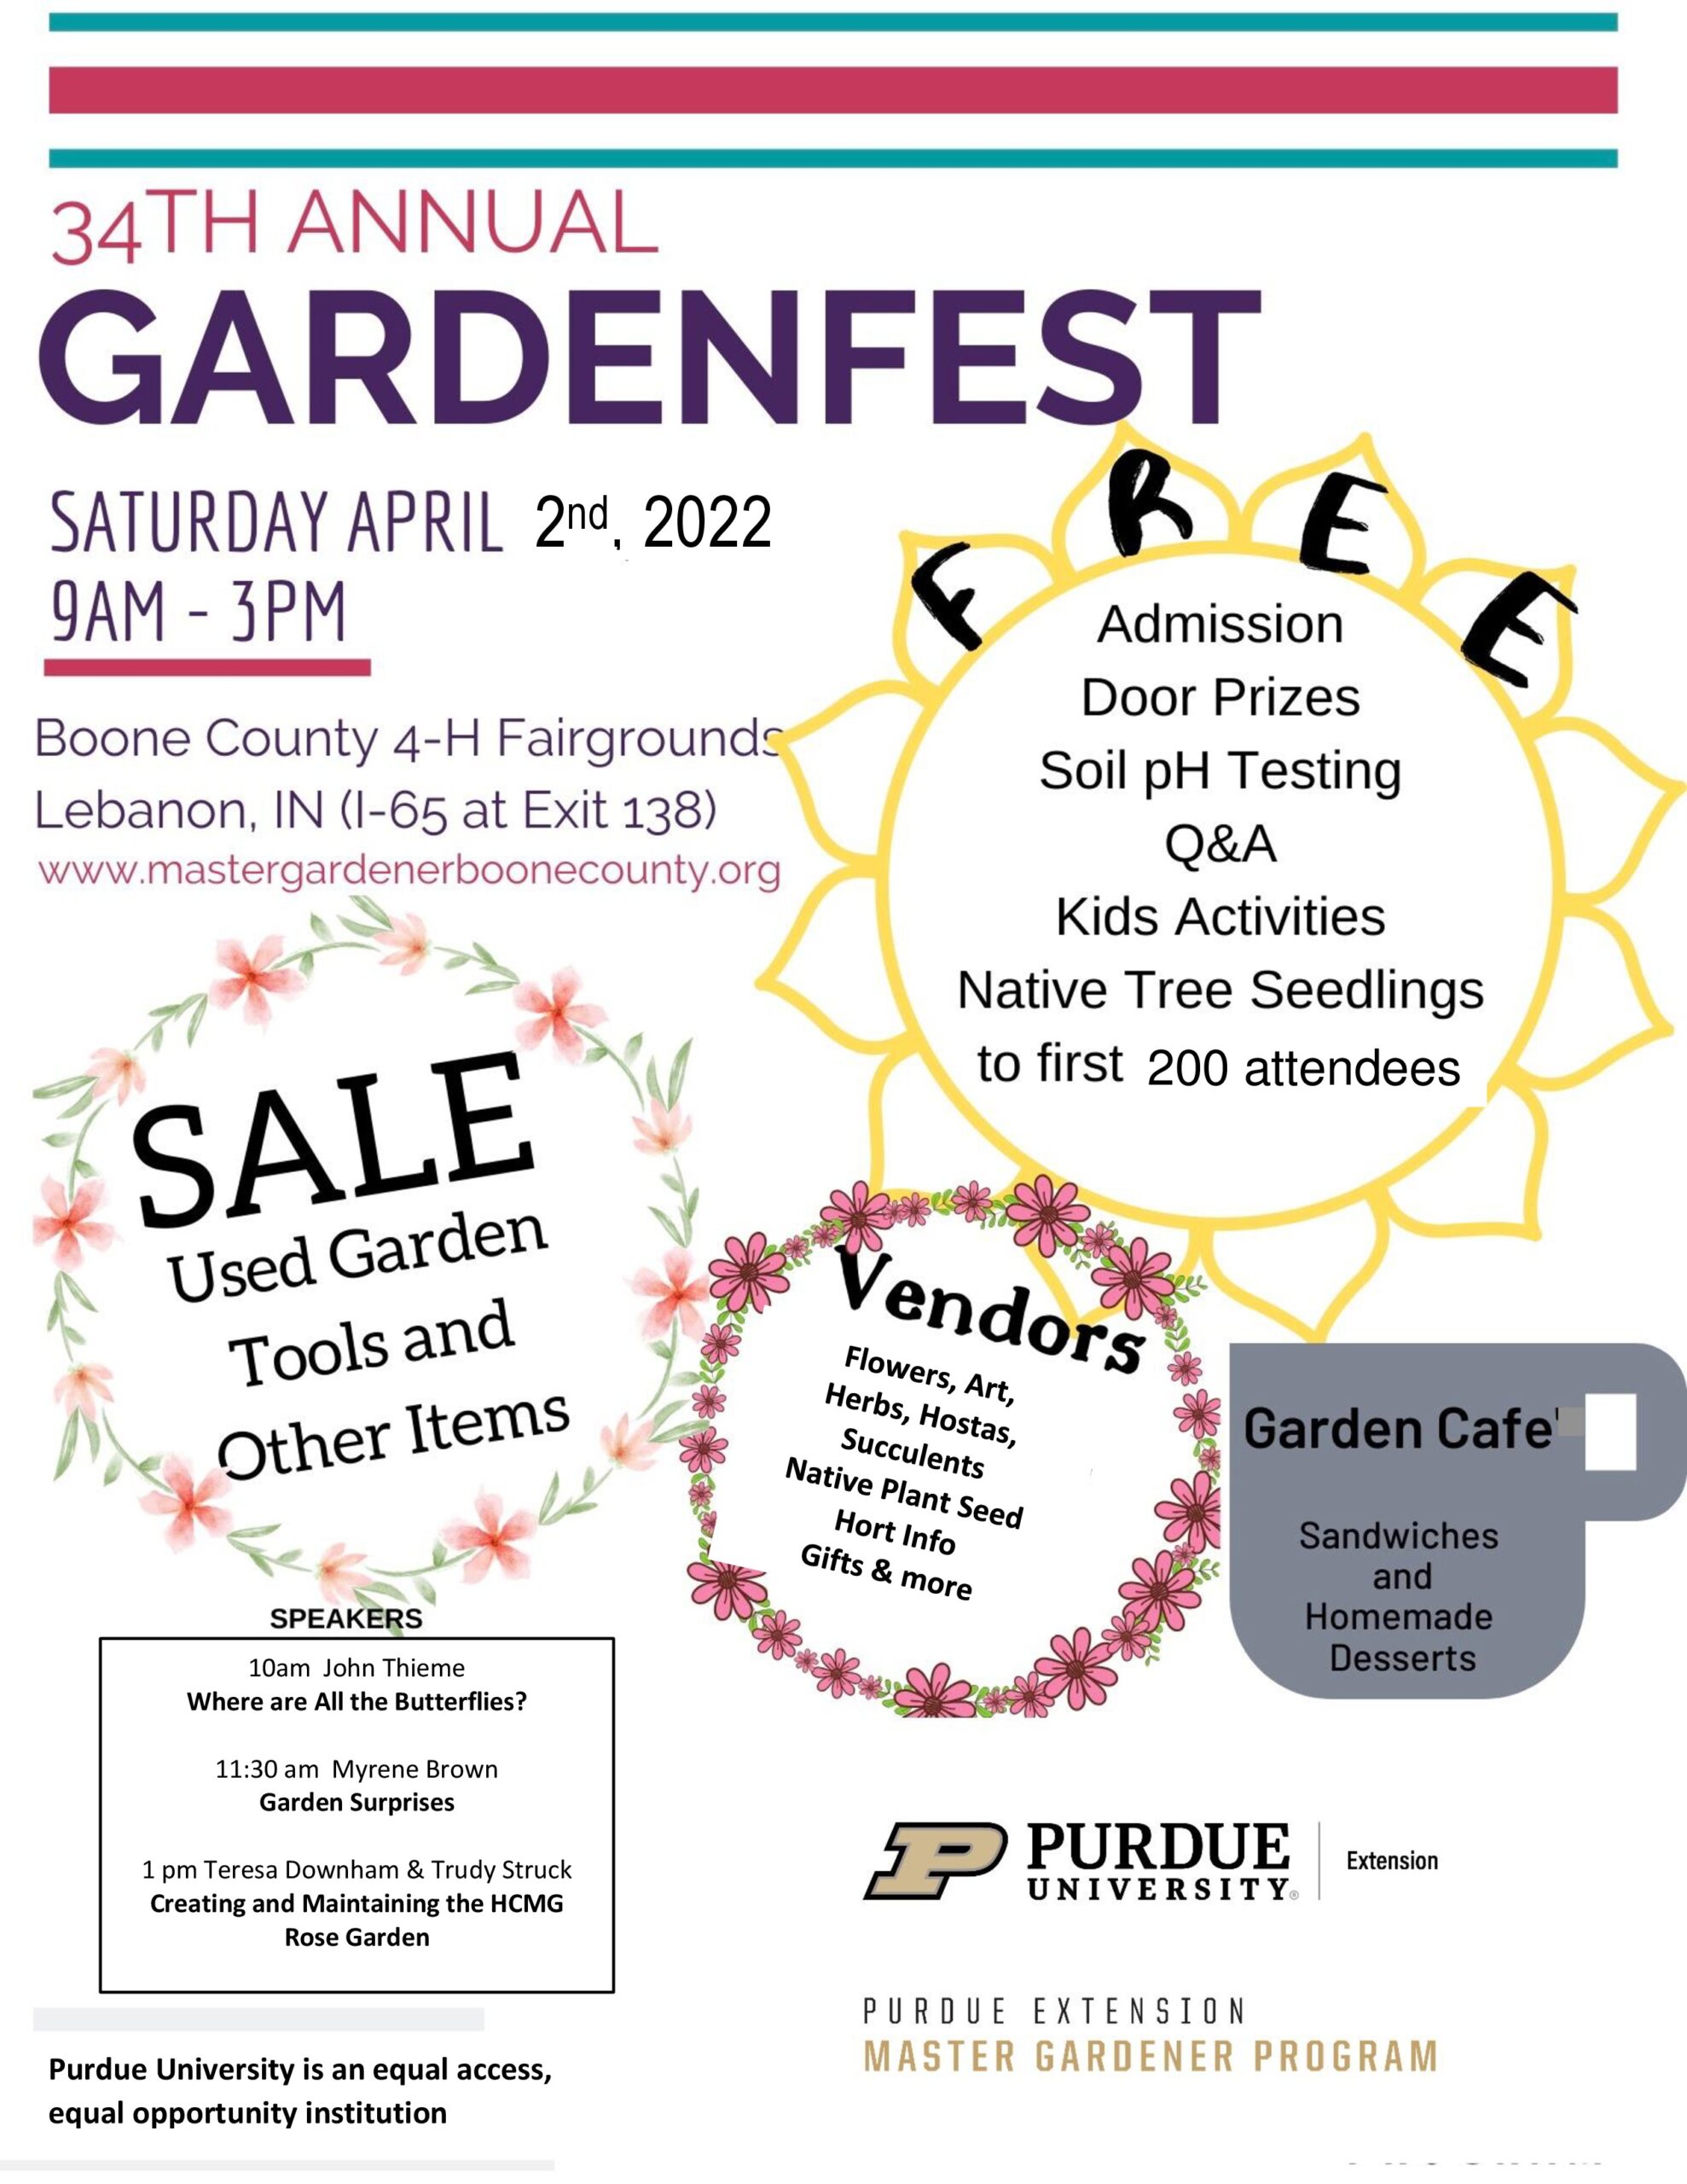 Boone County Gardenfest 2022 Purdue University Extension Master Gardener Program